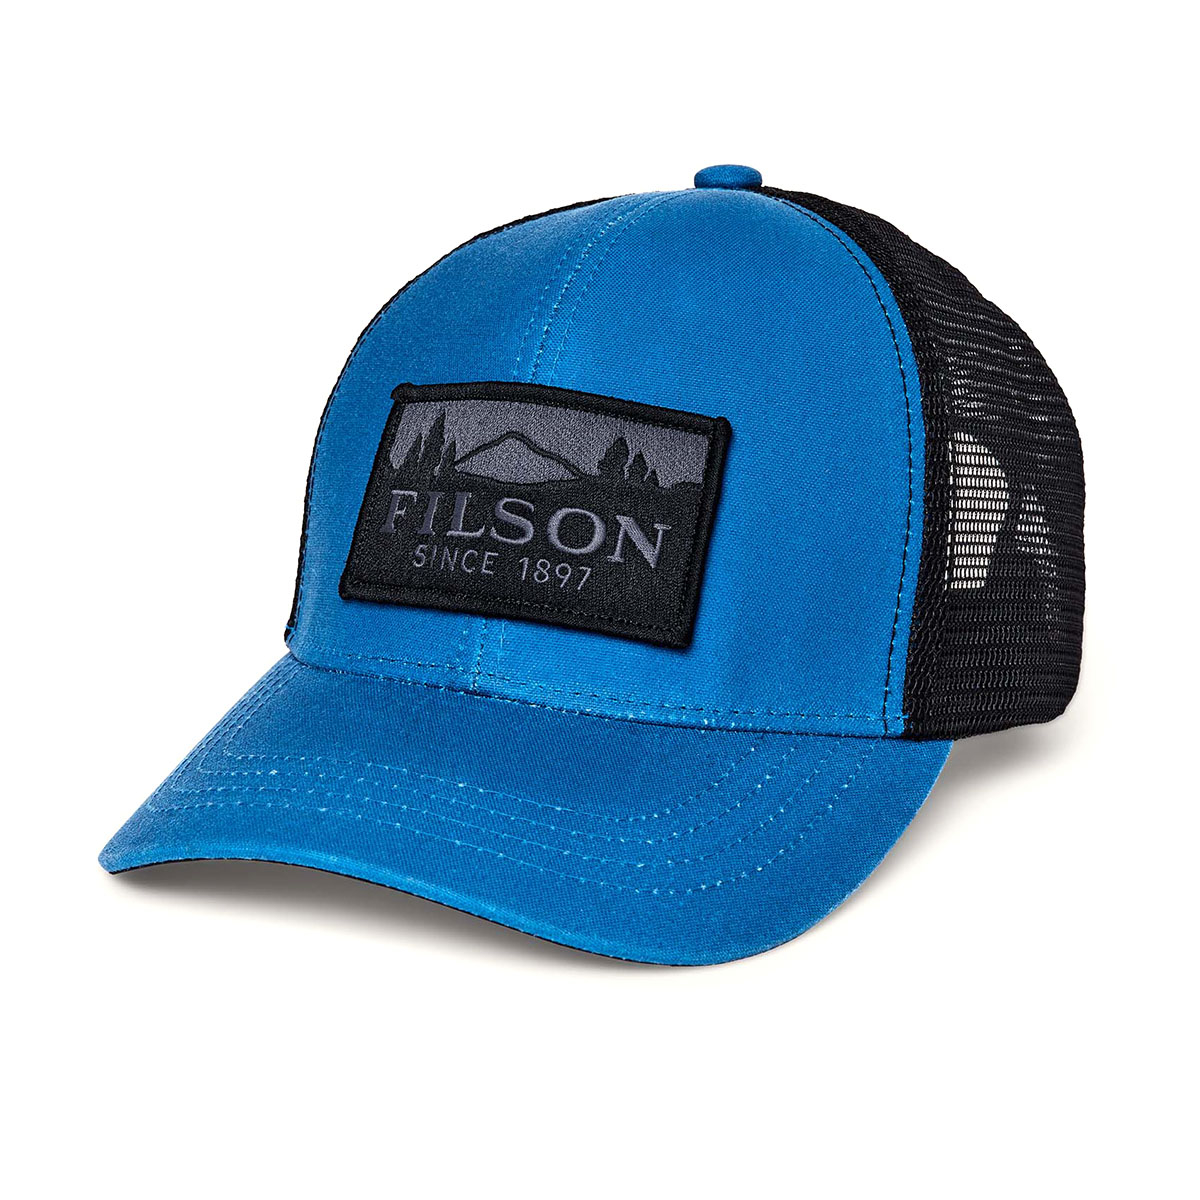 Filson Logger Mesh Cap Marlin Blue, iconic cap made of durable Tin Cloth